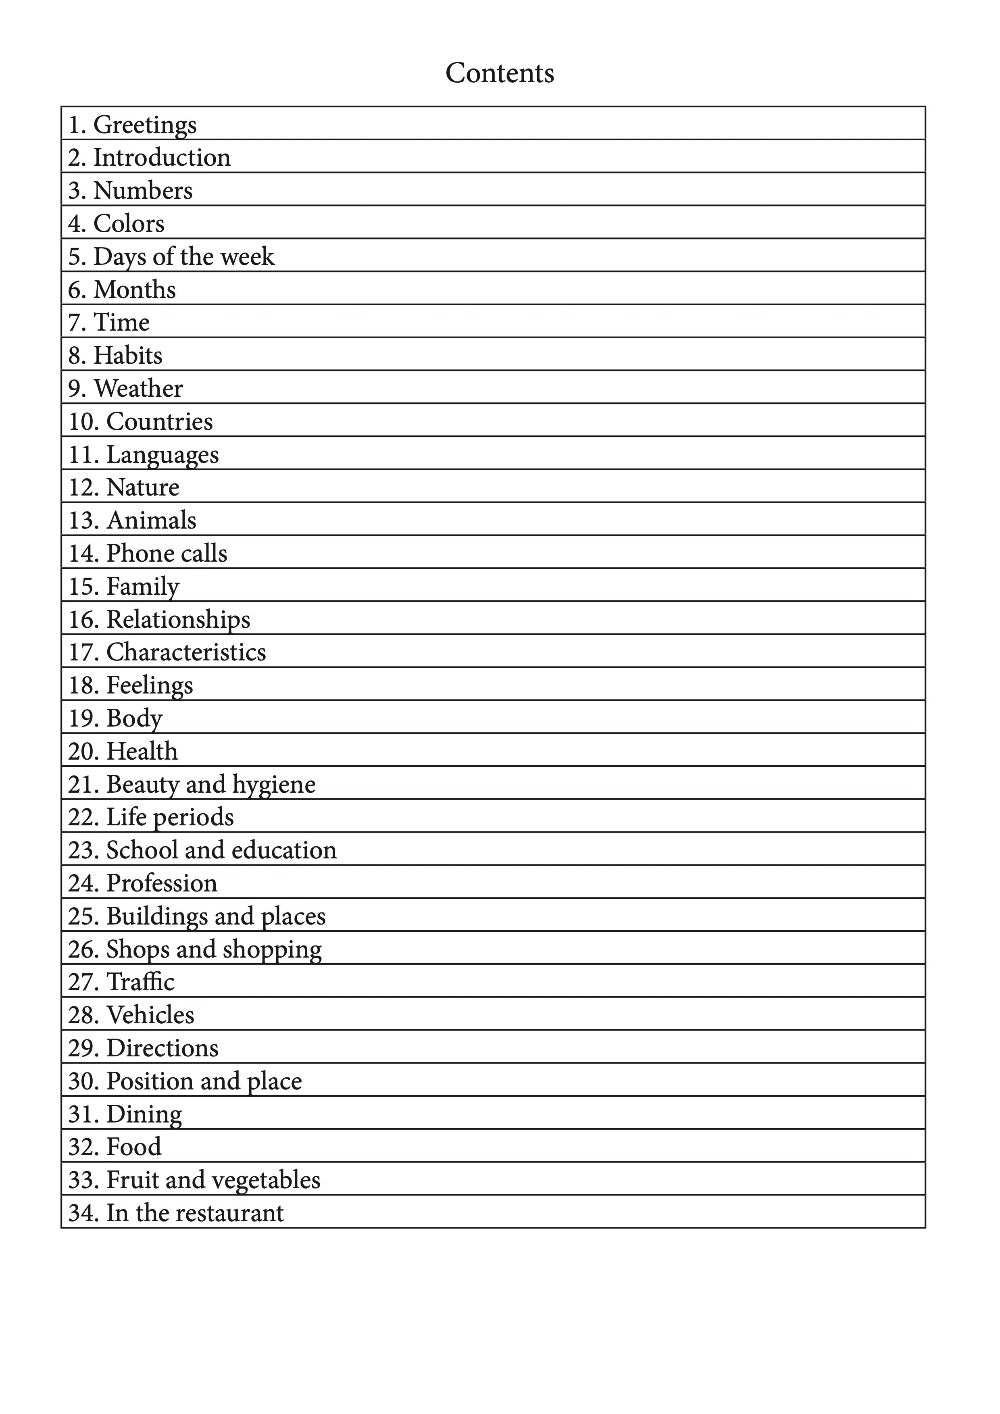 Kunama language learning notebook contents page 1